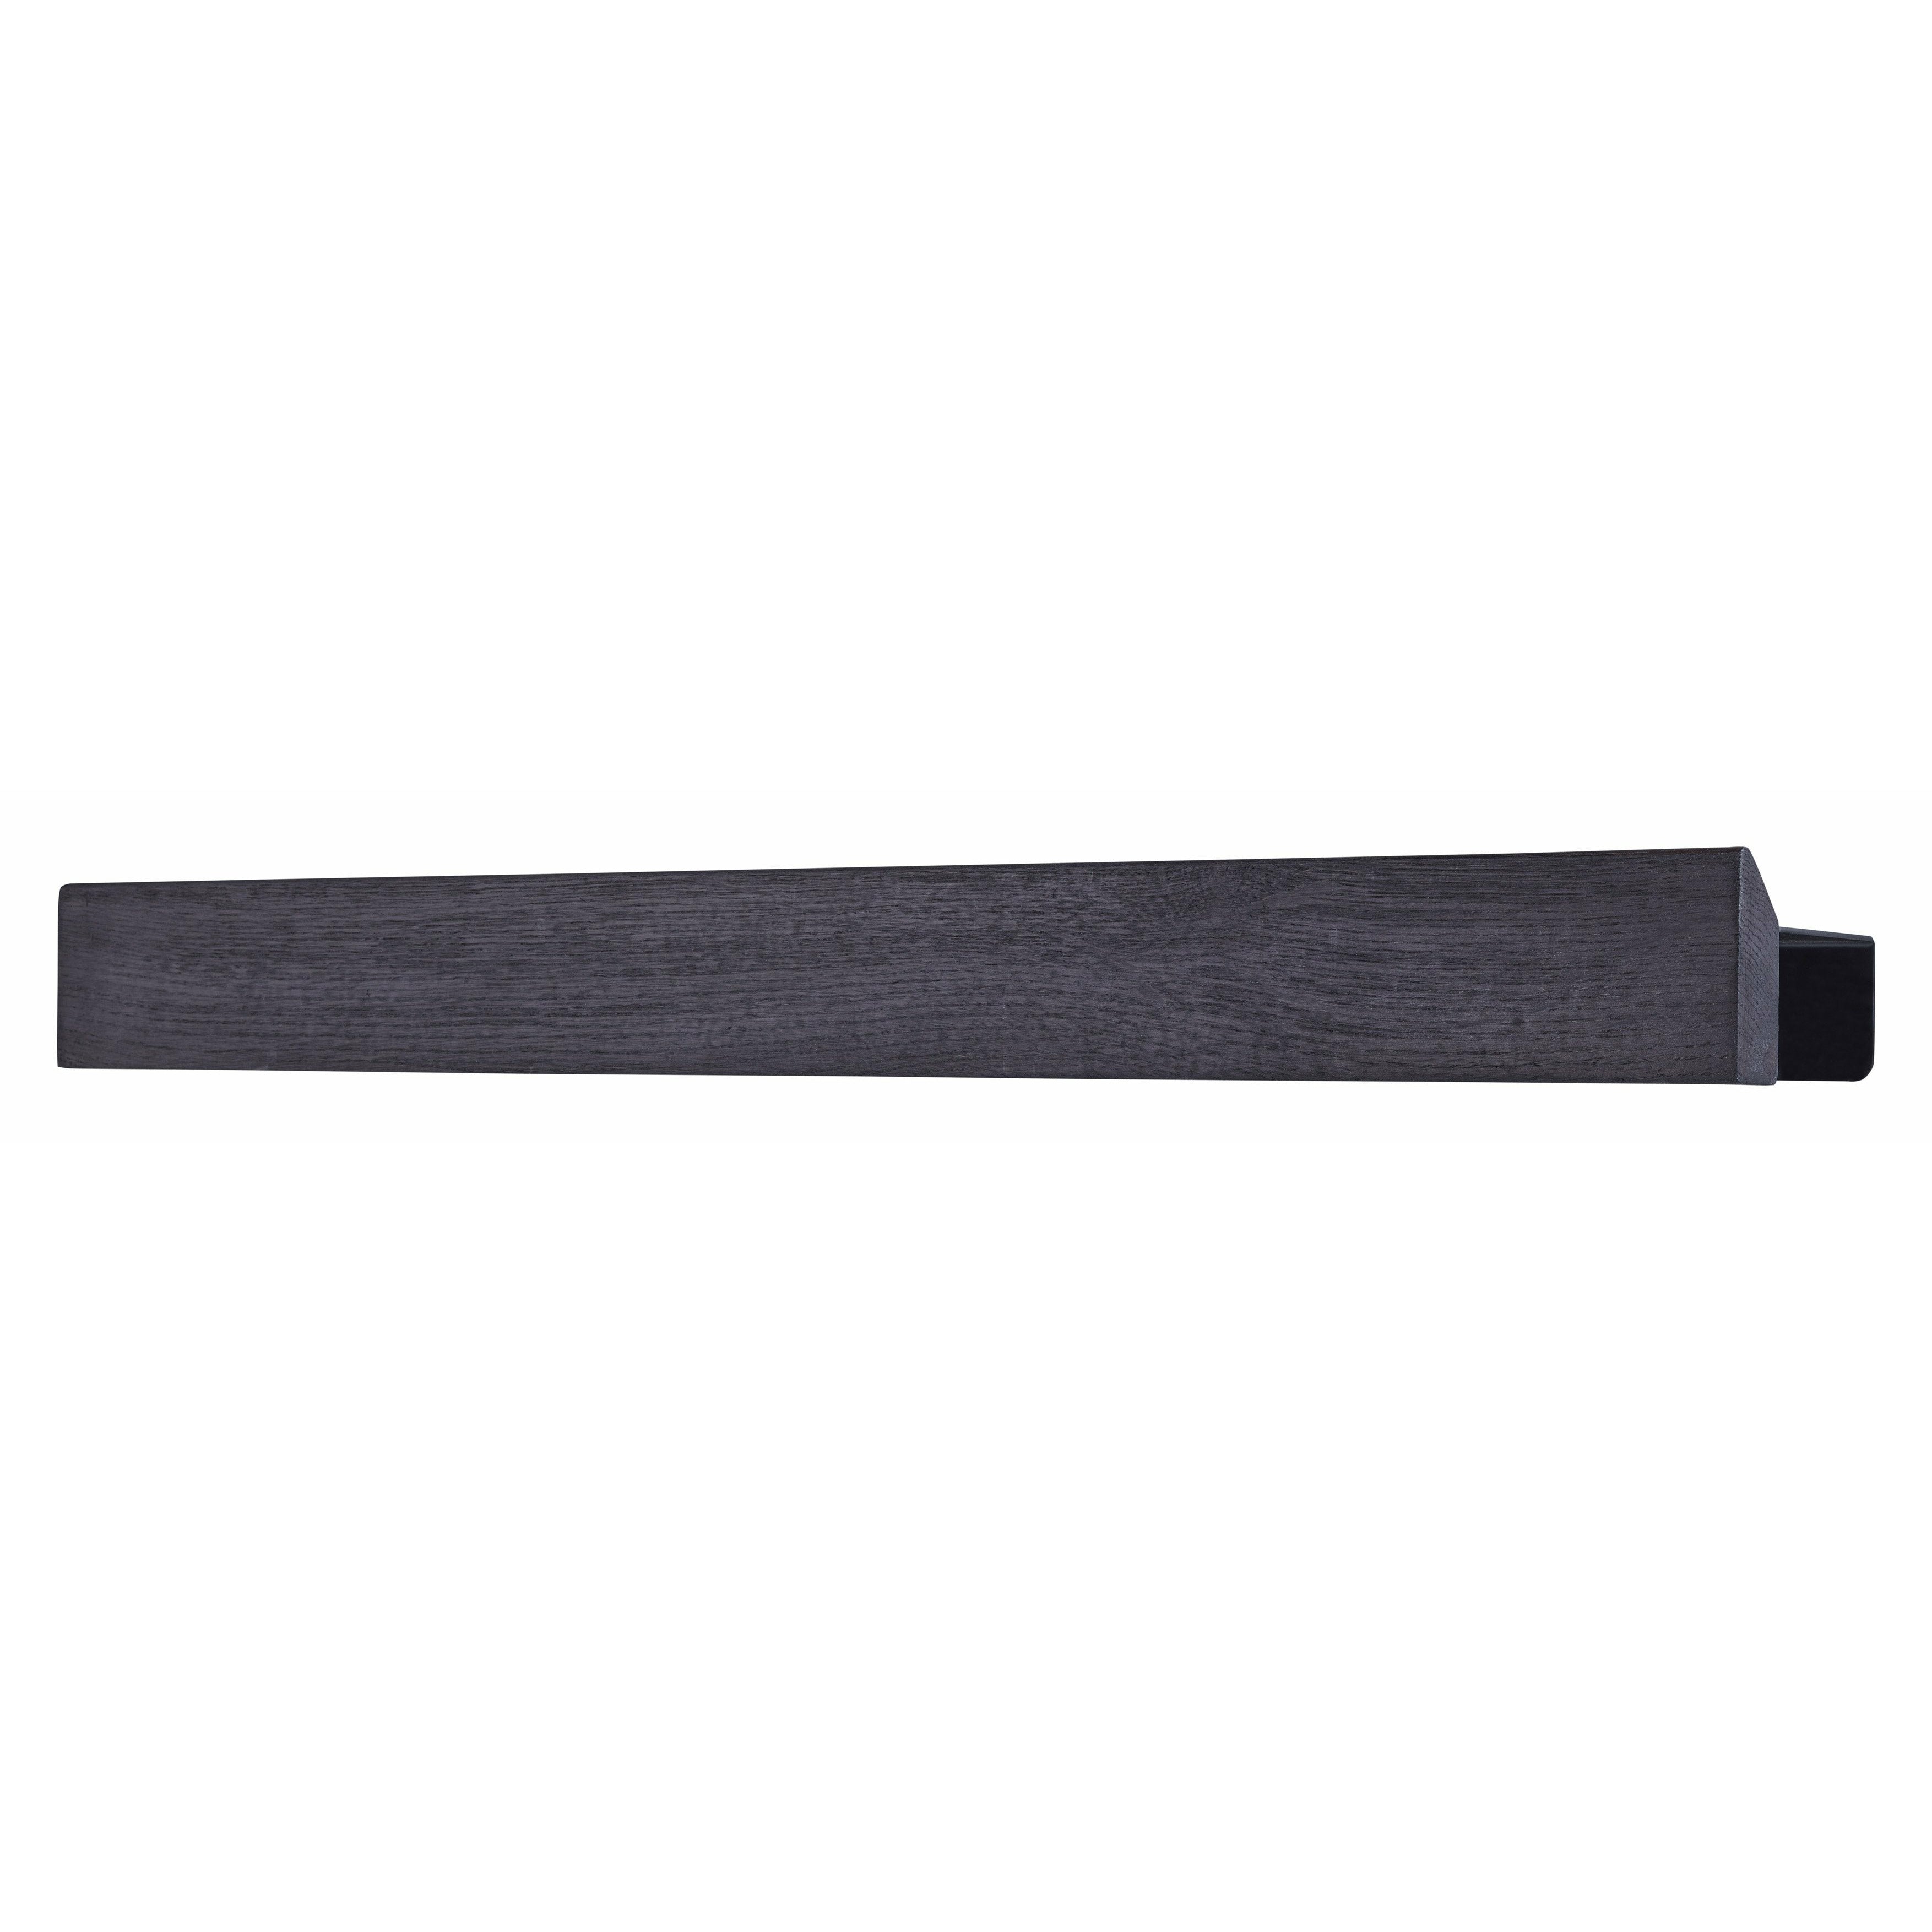 GEJST FLEX RIAL 60 quercia nera/nero, 6 cm